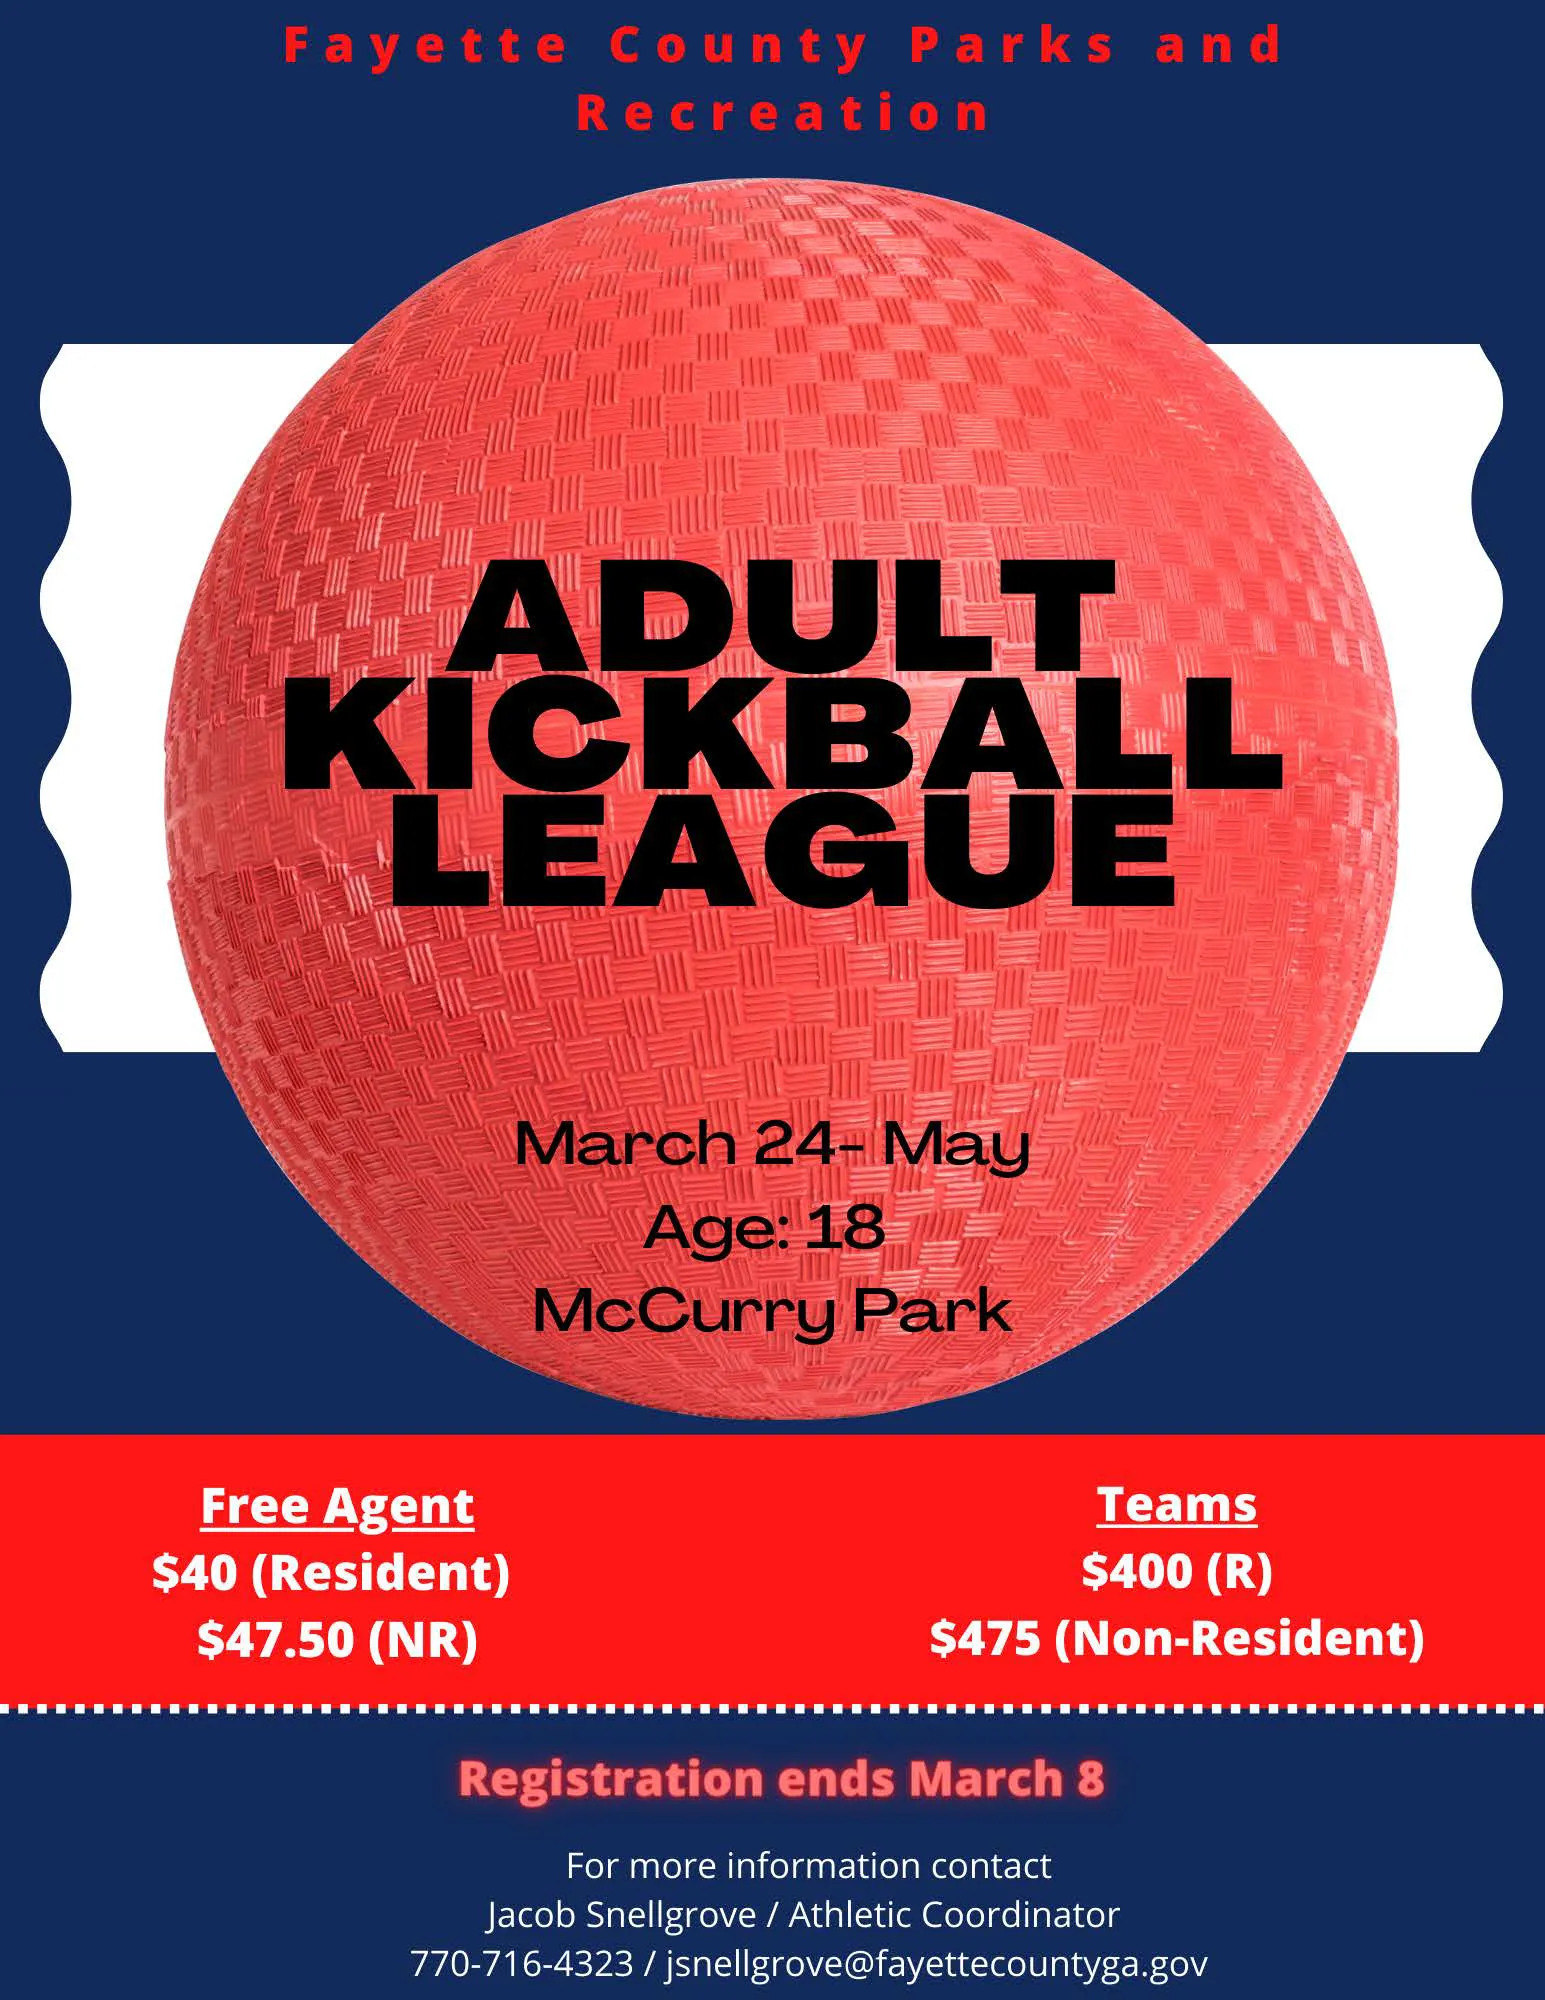 Adult Kickball League Flyer></a></li>
        <li><a href=